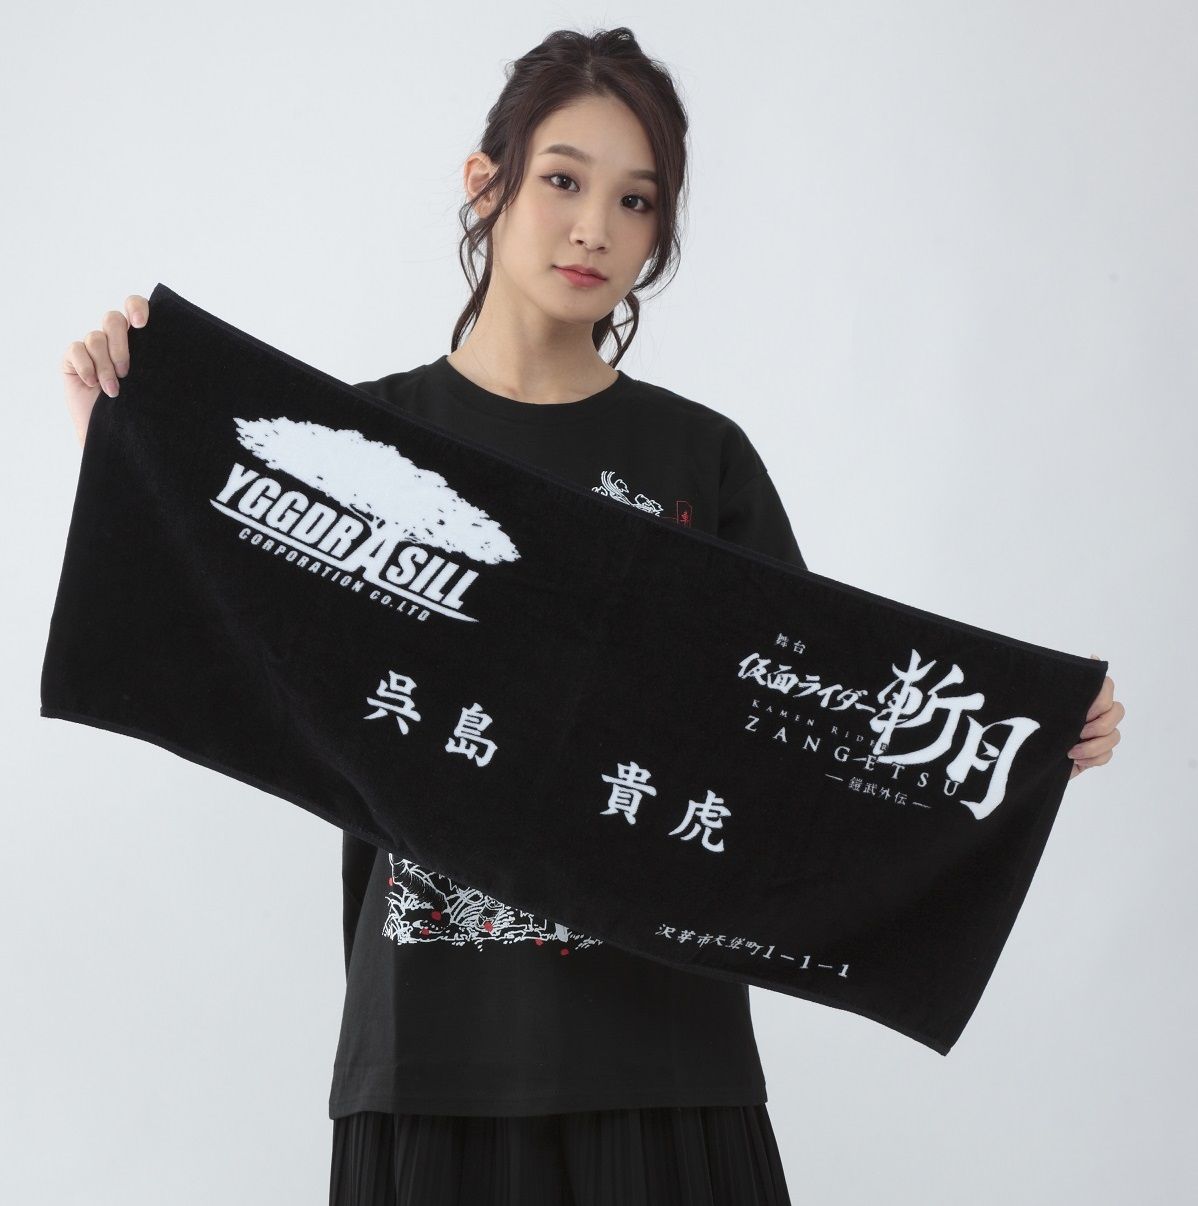 Stage show "KAMEN RIDER ZANGETSU" -Gaim Gaiden-  Takatora Kureshima name card style facial towel.